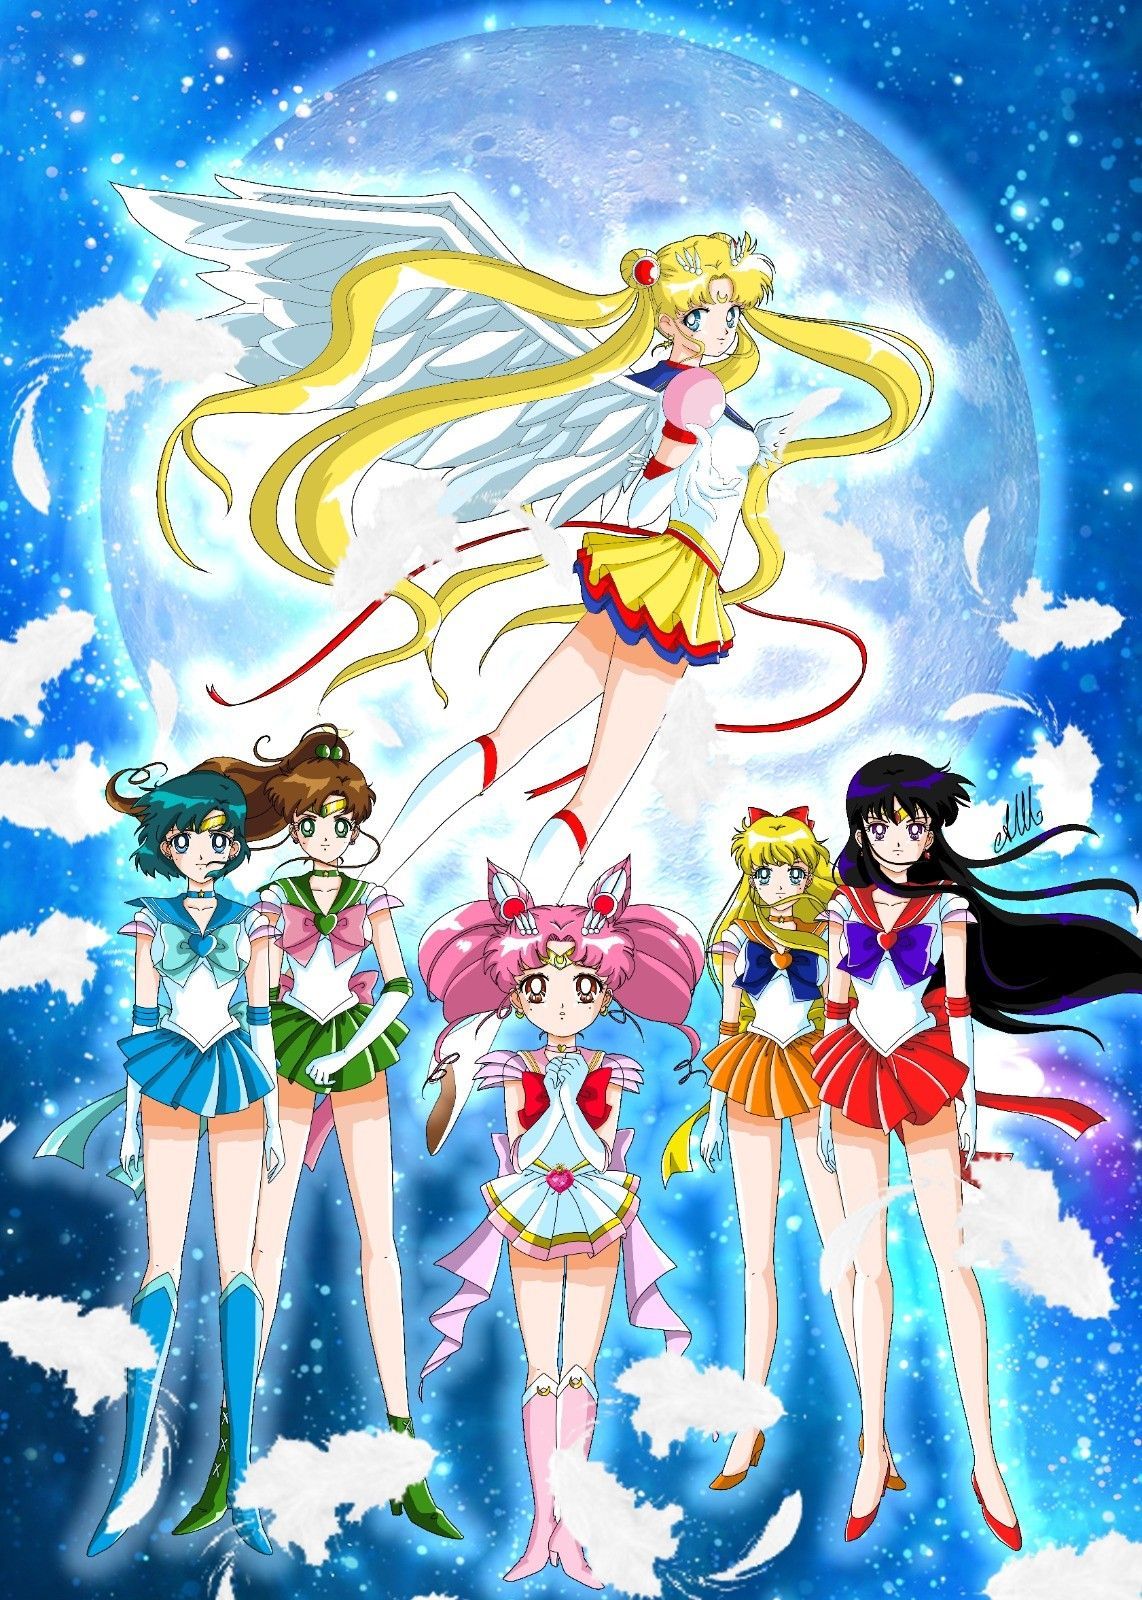 Sailor moon eternal. Sailor moon wallpaper, Sailor mini moon, Sailor